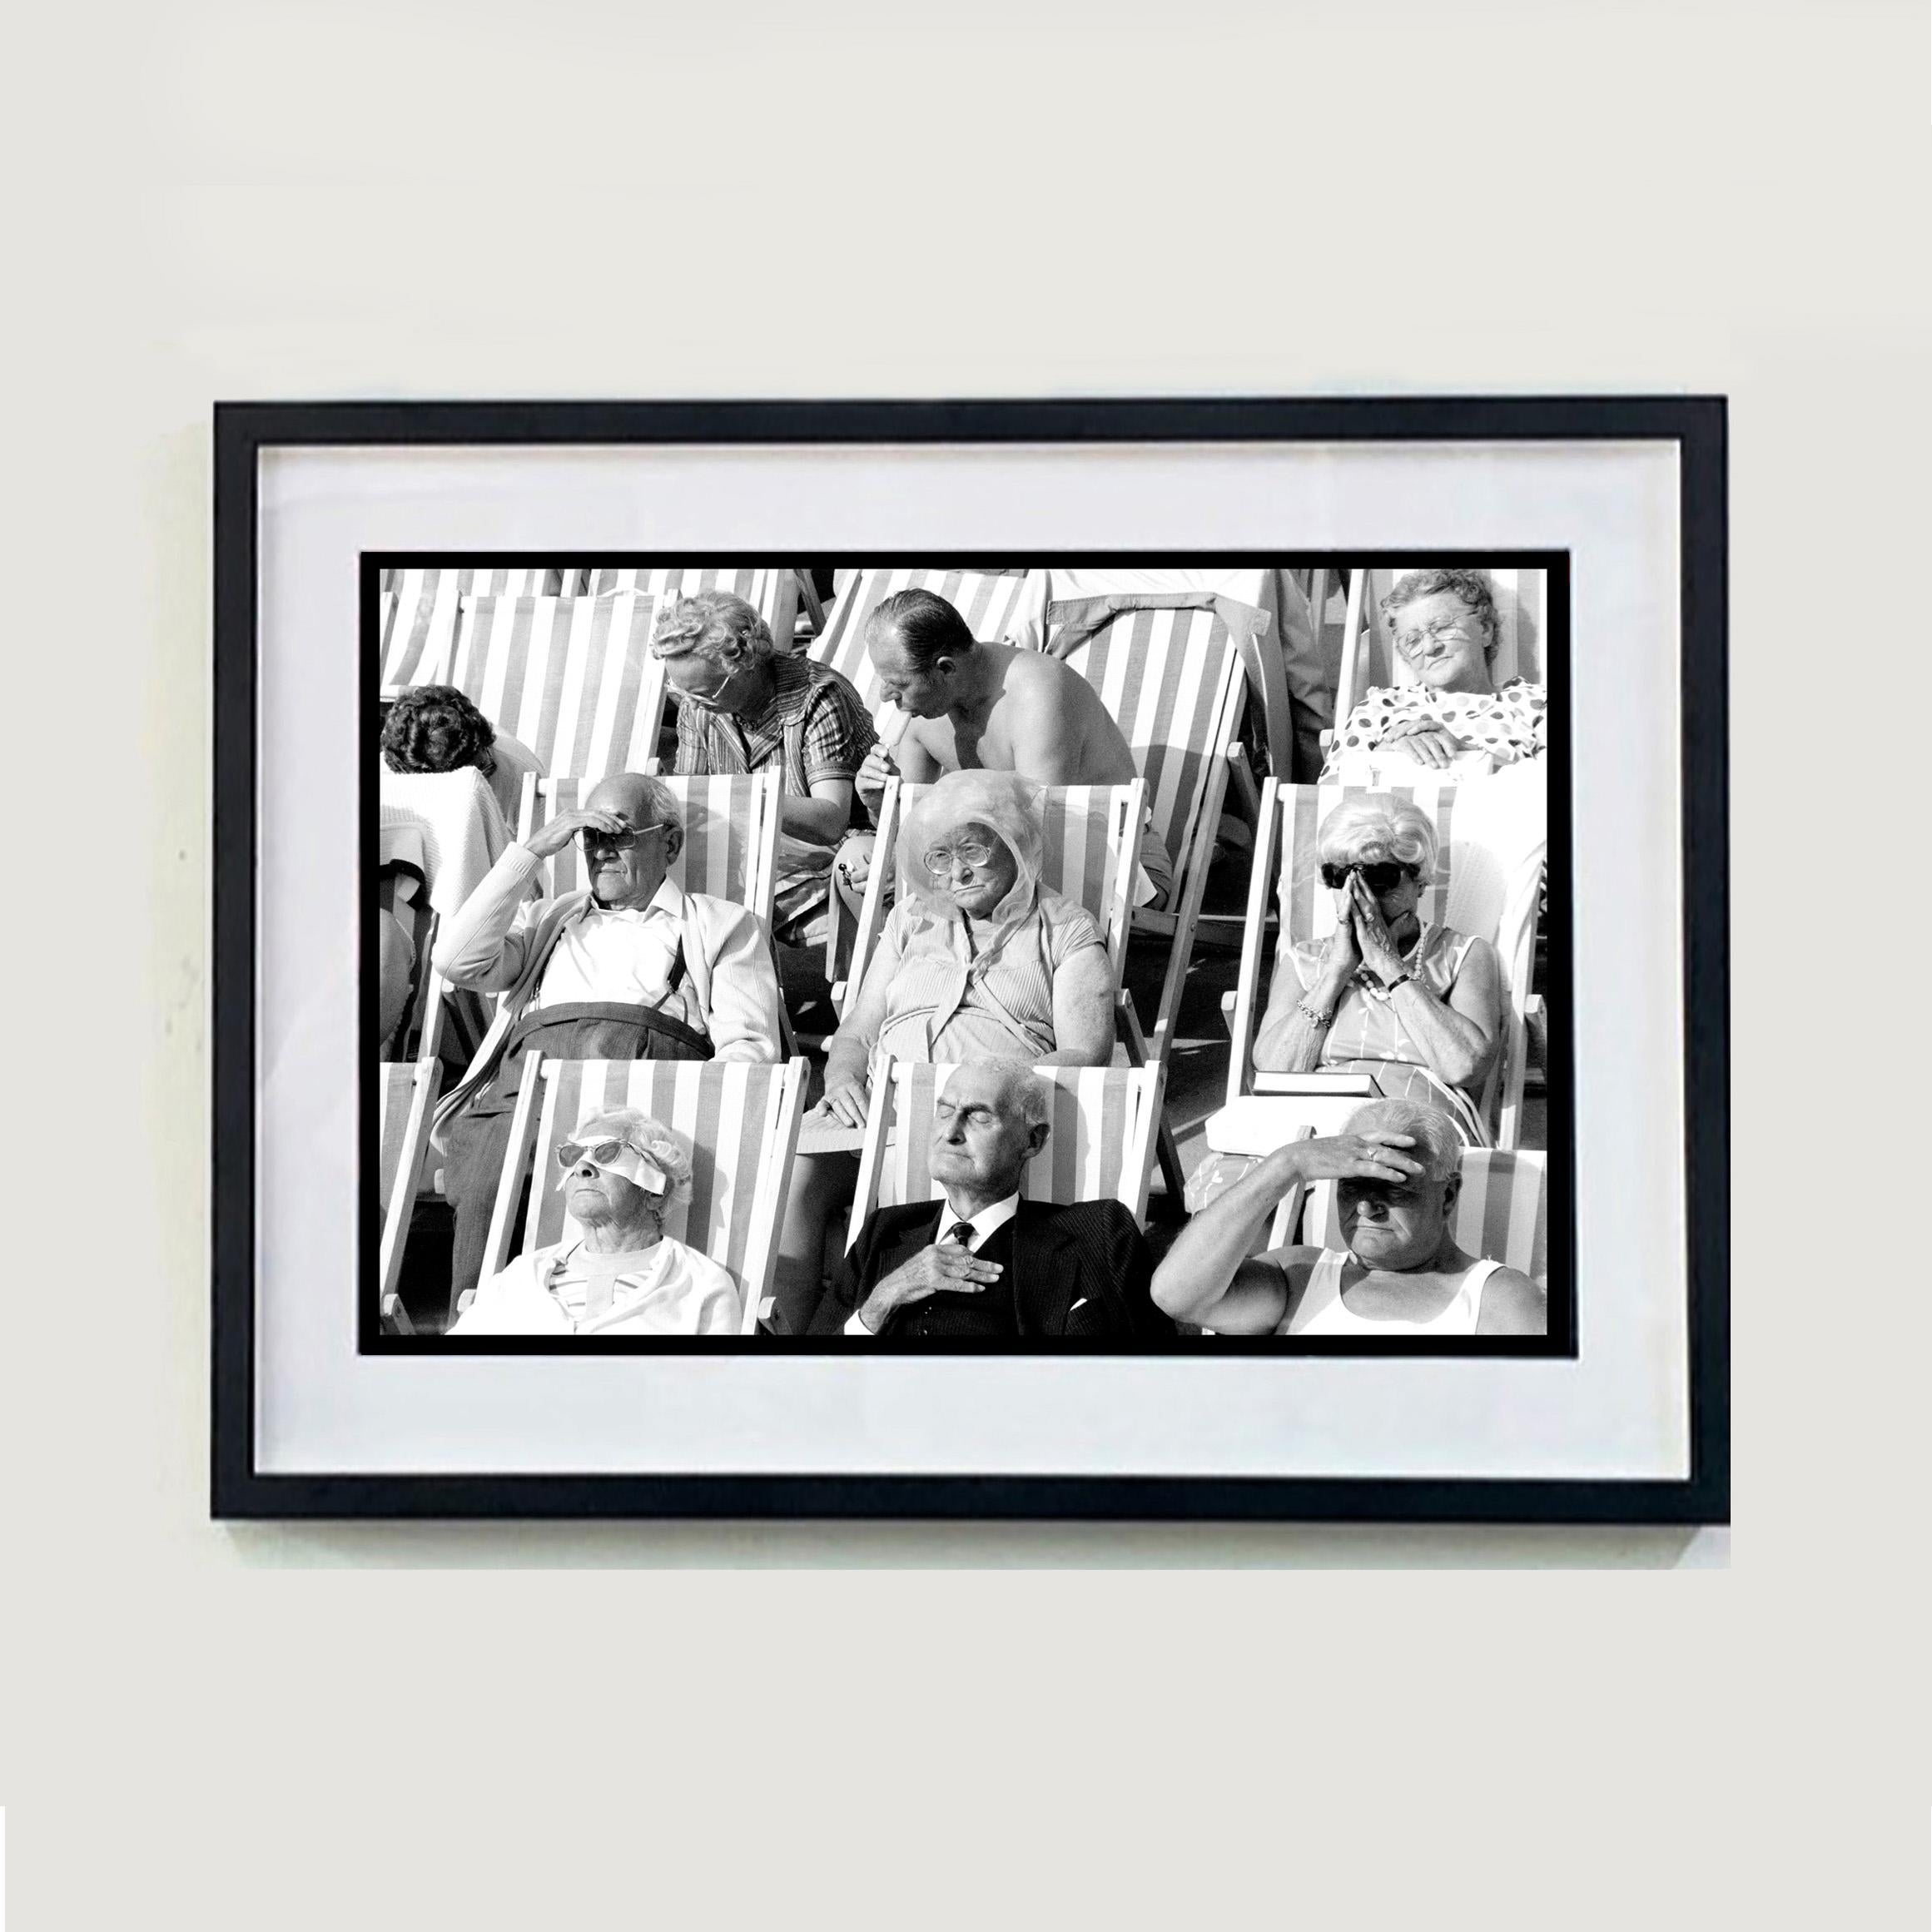 Bandstand II, Eastbourne, UK - Black and White Vintage Photography - Gray Black and White Photograph by Samuel Field